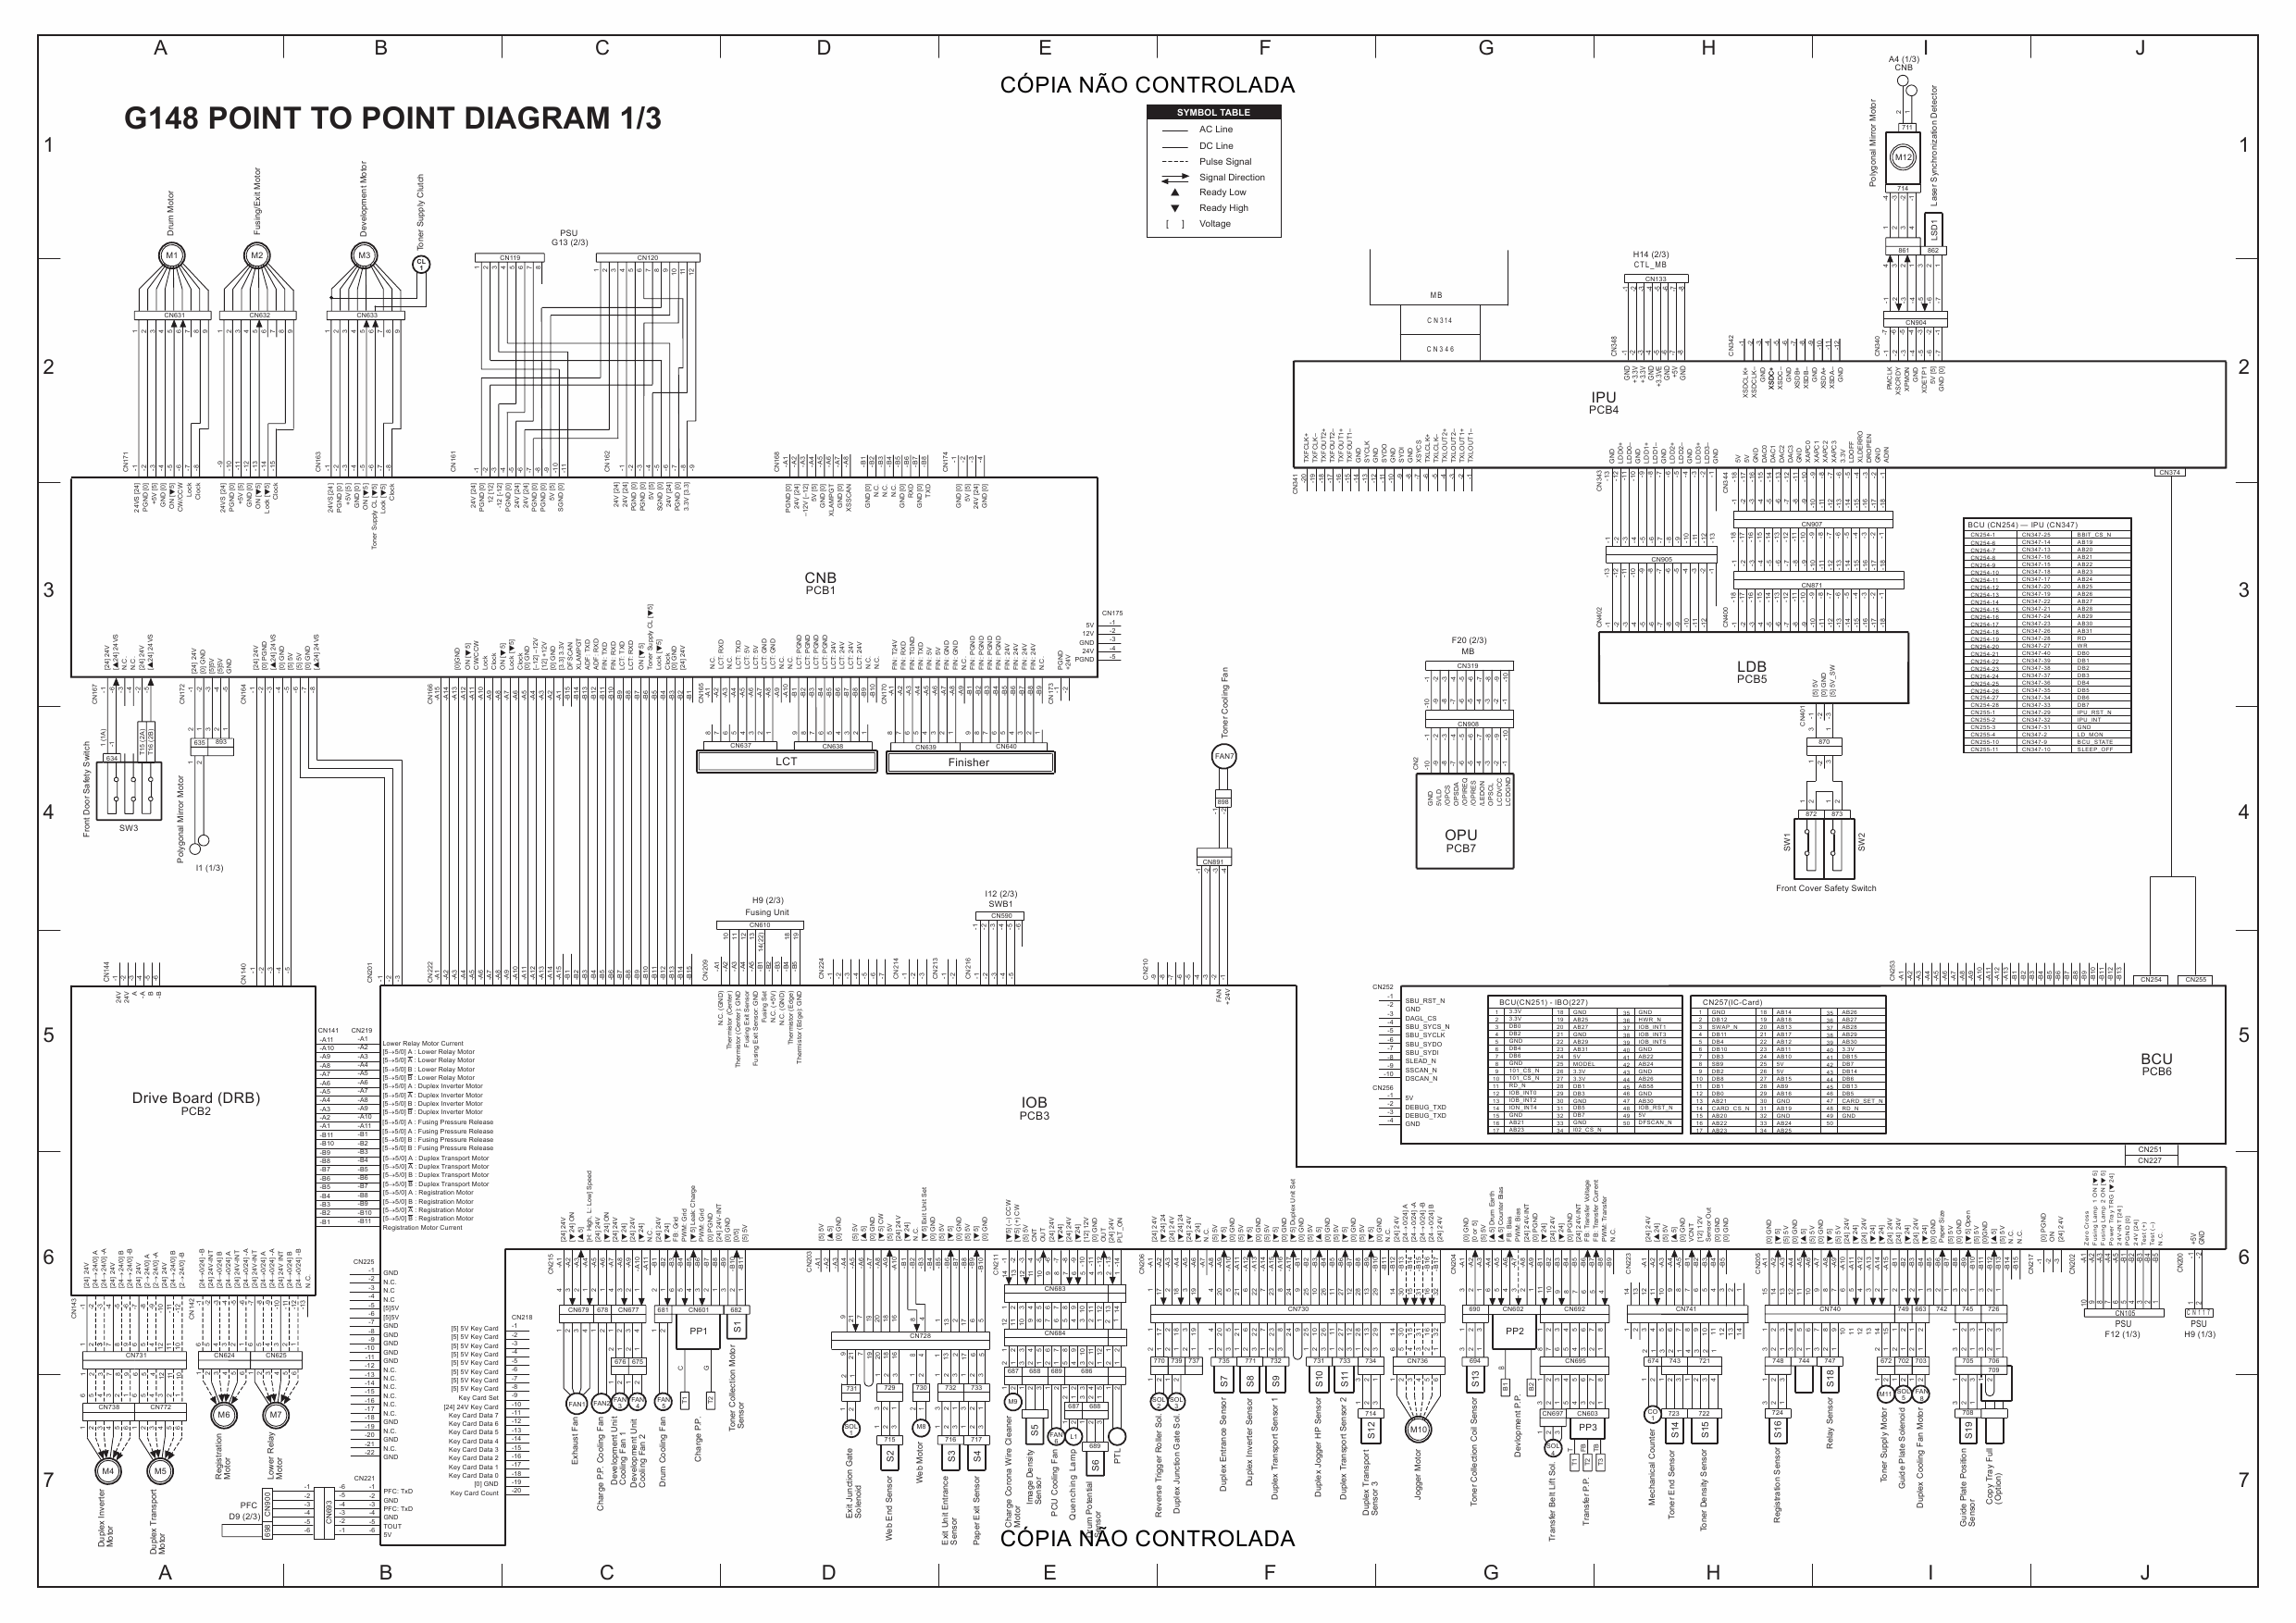 RICOH Aficio SP-9100DN AP900 G126 G148 Circuit Diagram-6